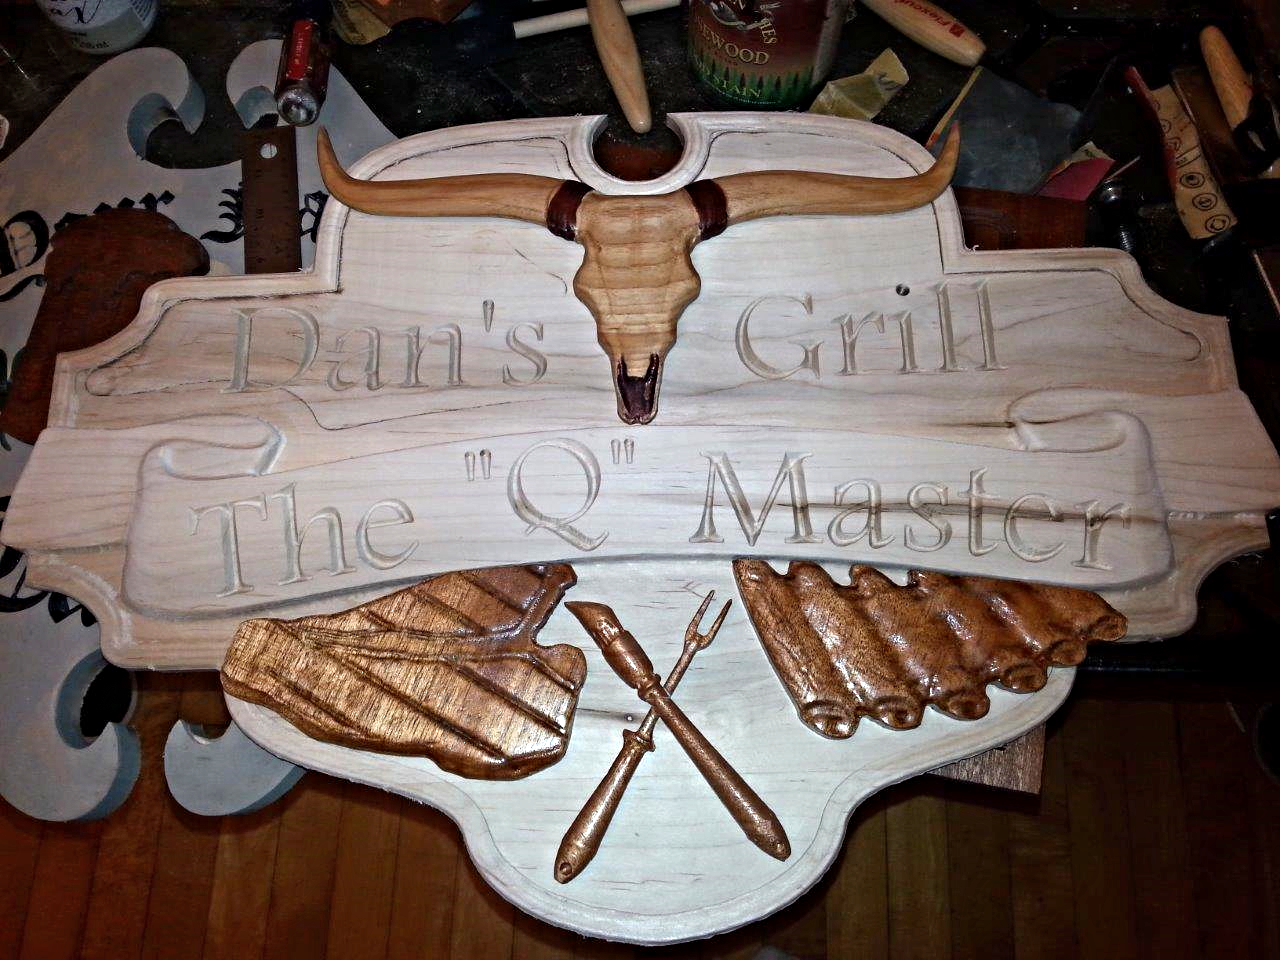 Dan's Grill CNC Wood Example